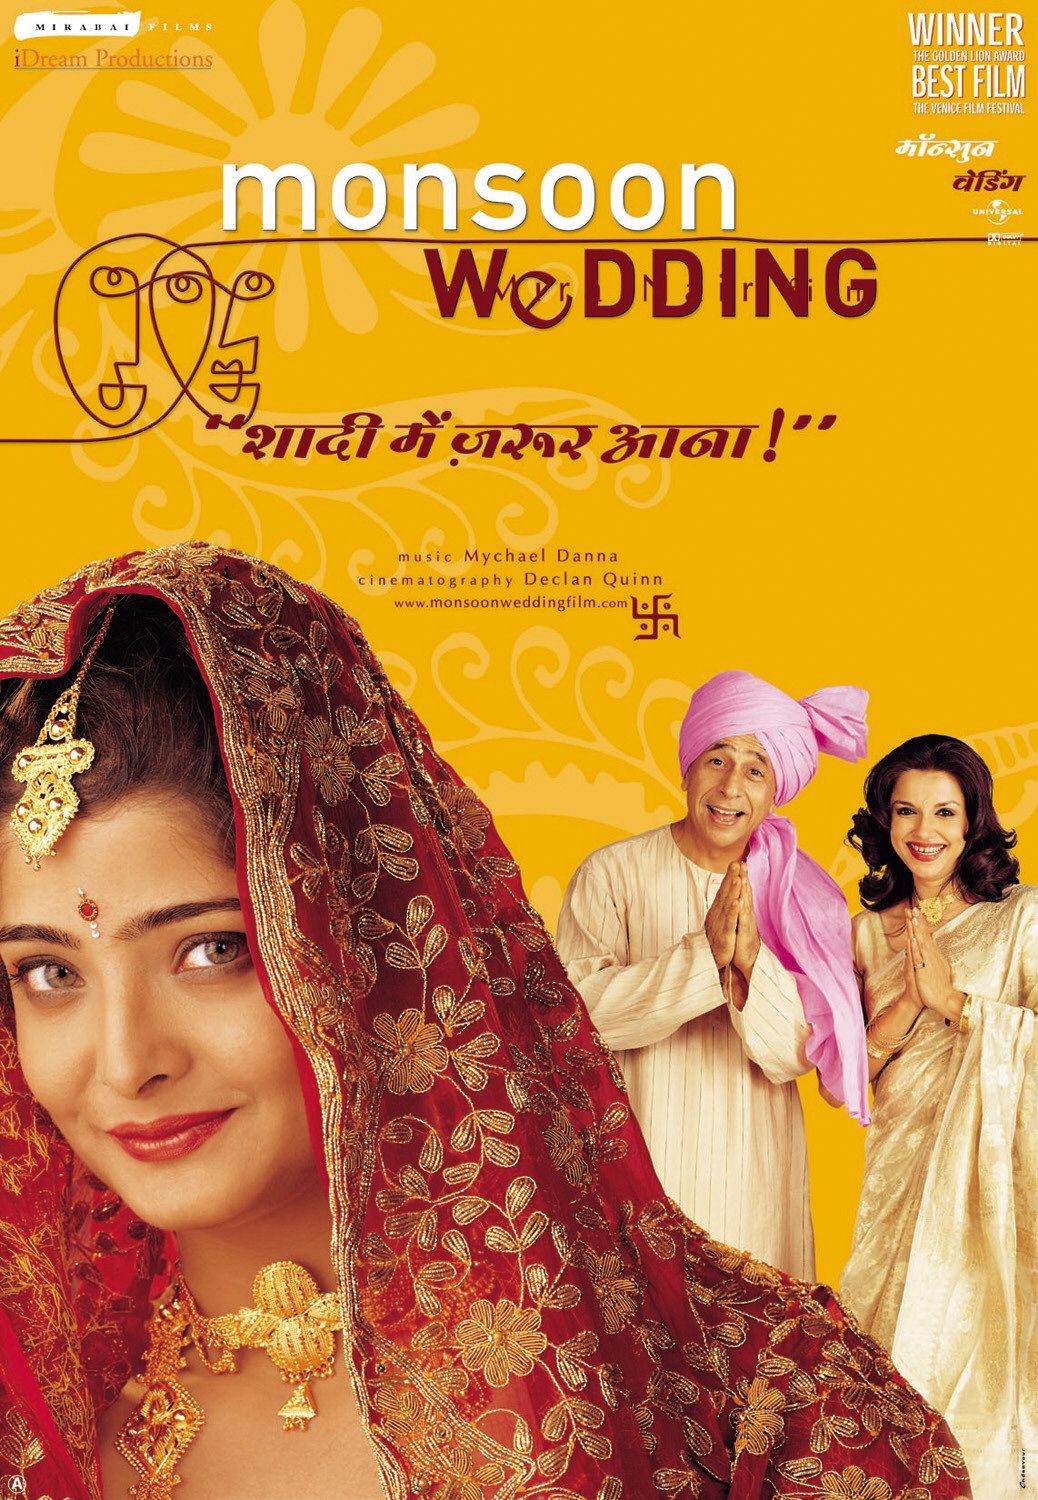 Monsoon Wedding 2001 18610 Poster.jpg